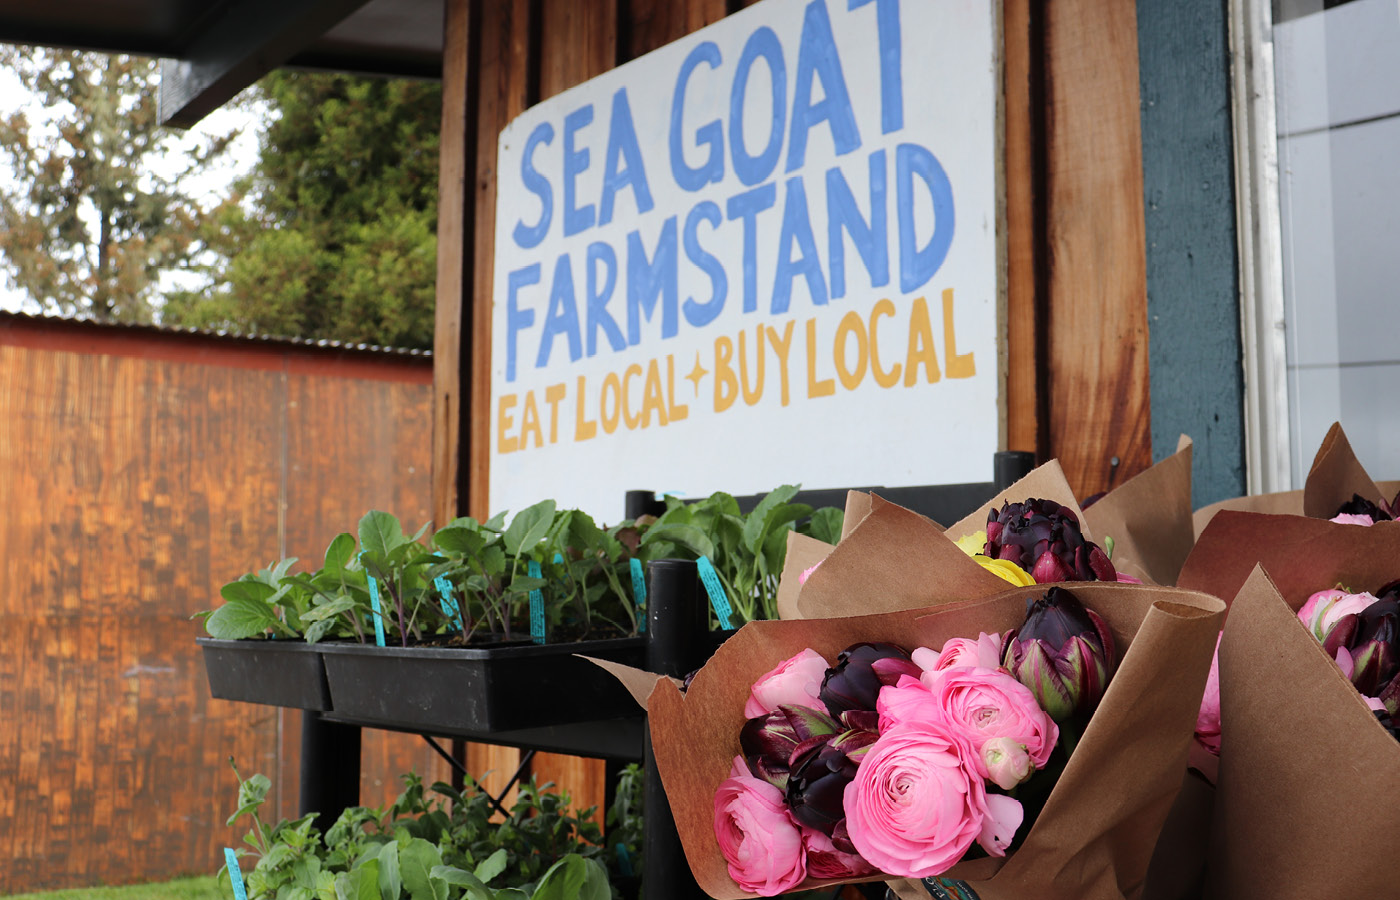 Sea Goat Farm Stand